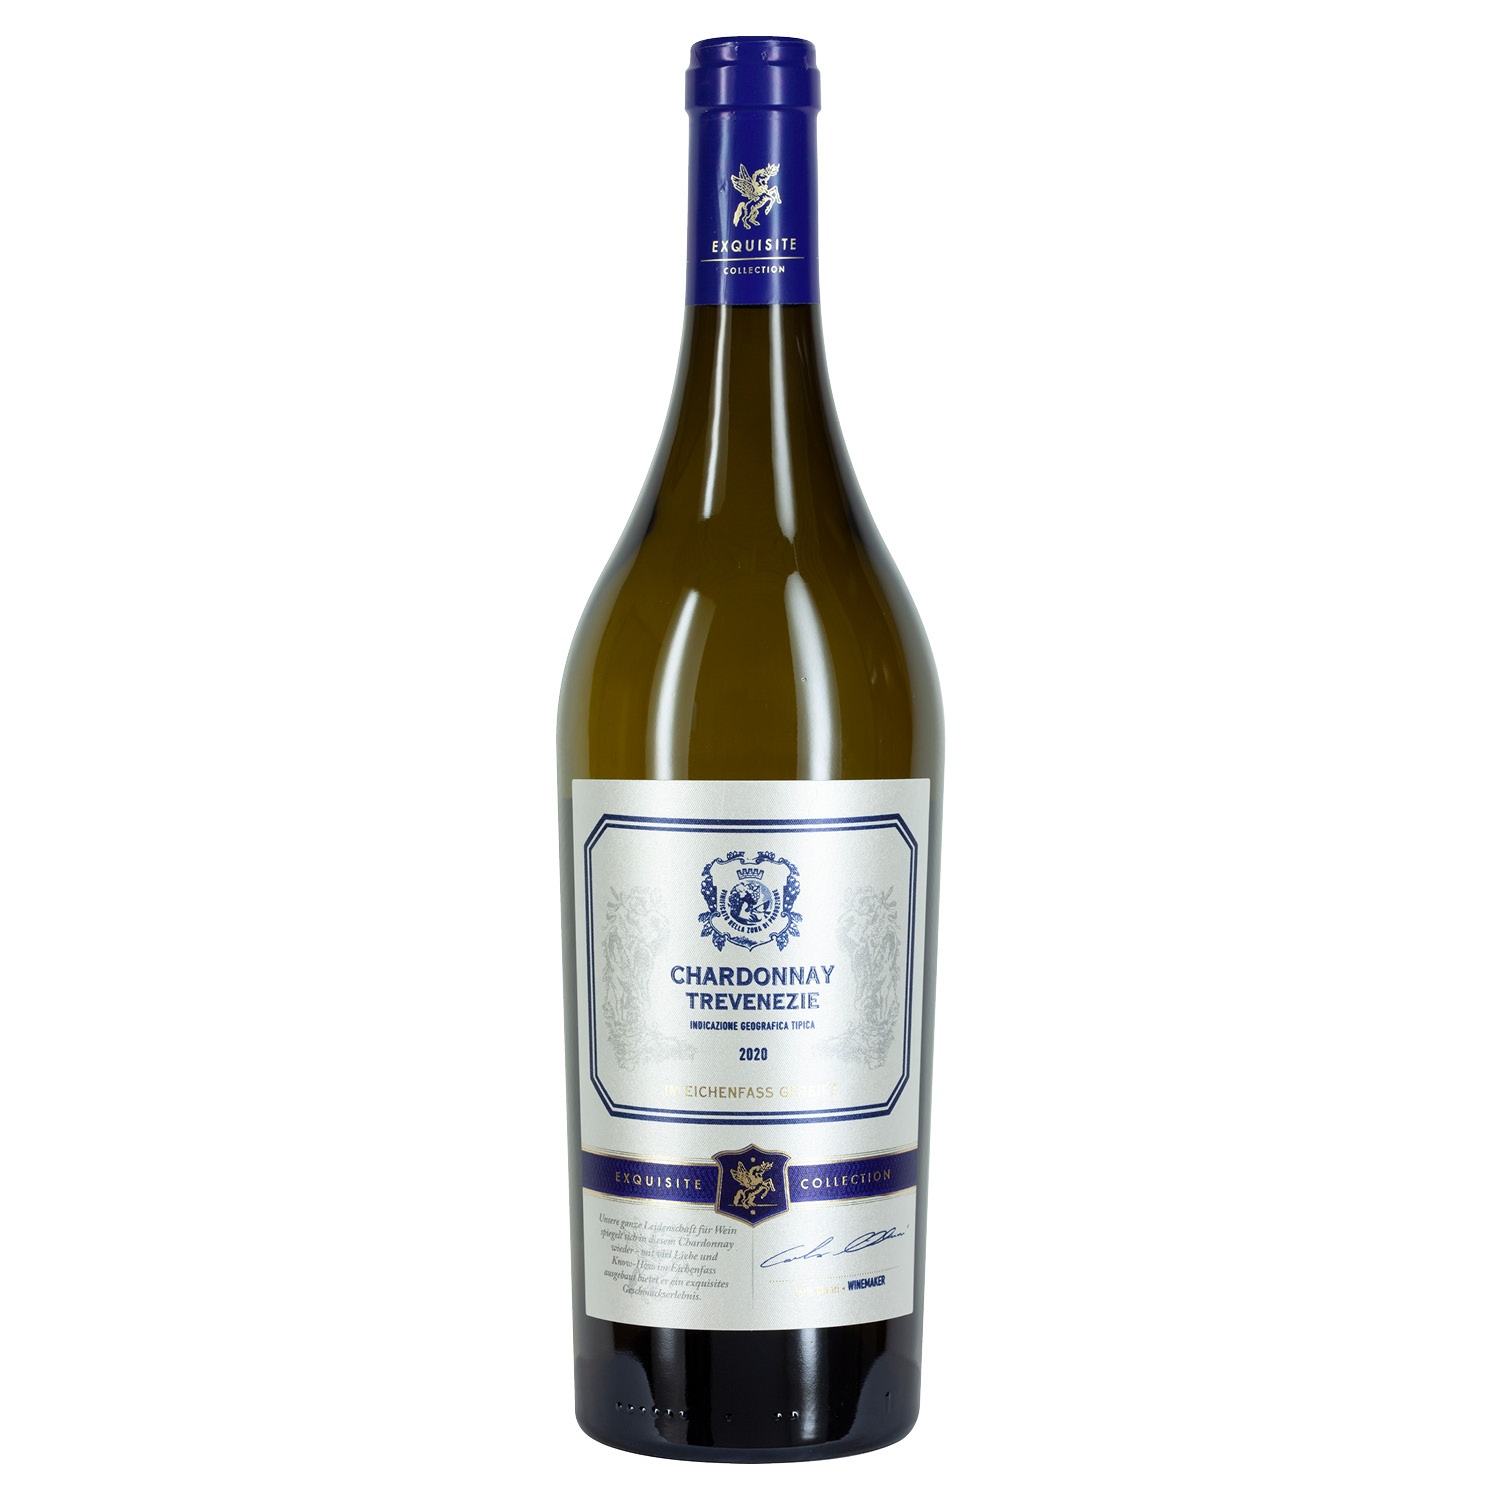 EXQUISITE COLLECTION 2020 Chardonnay Trevenezie IGT trocken 0,75 l